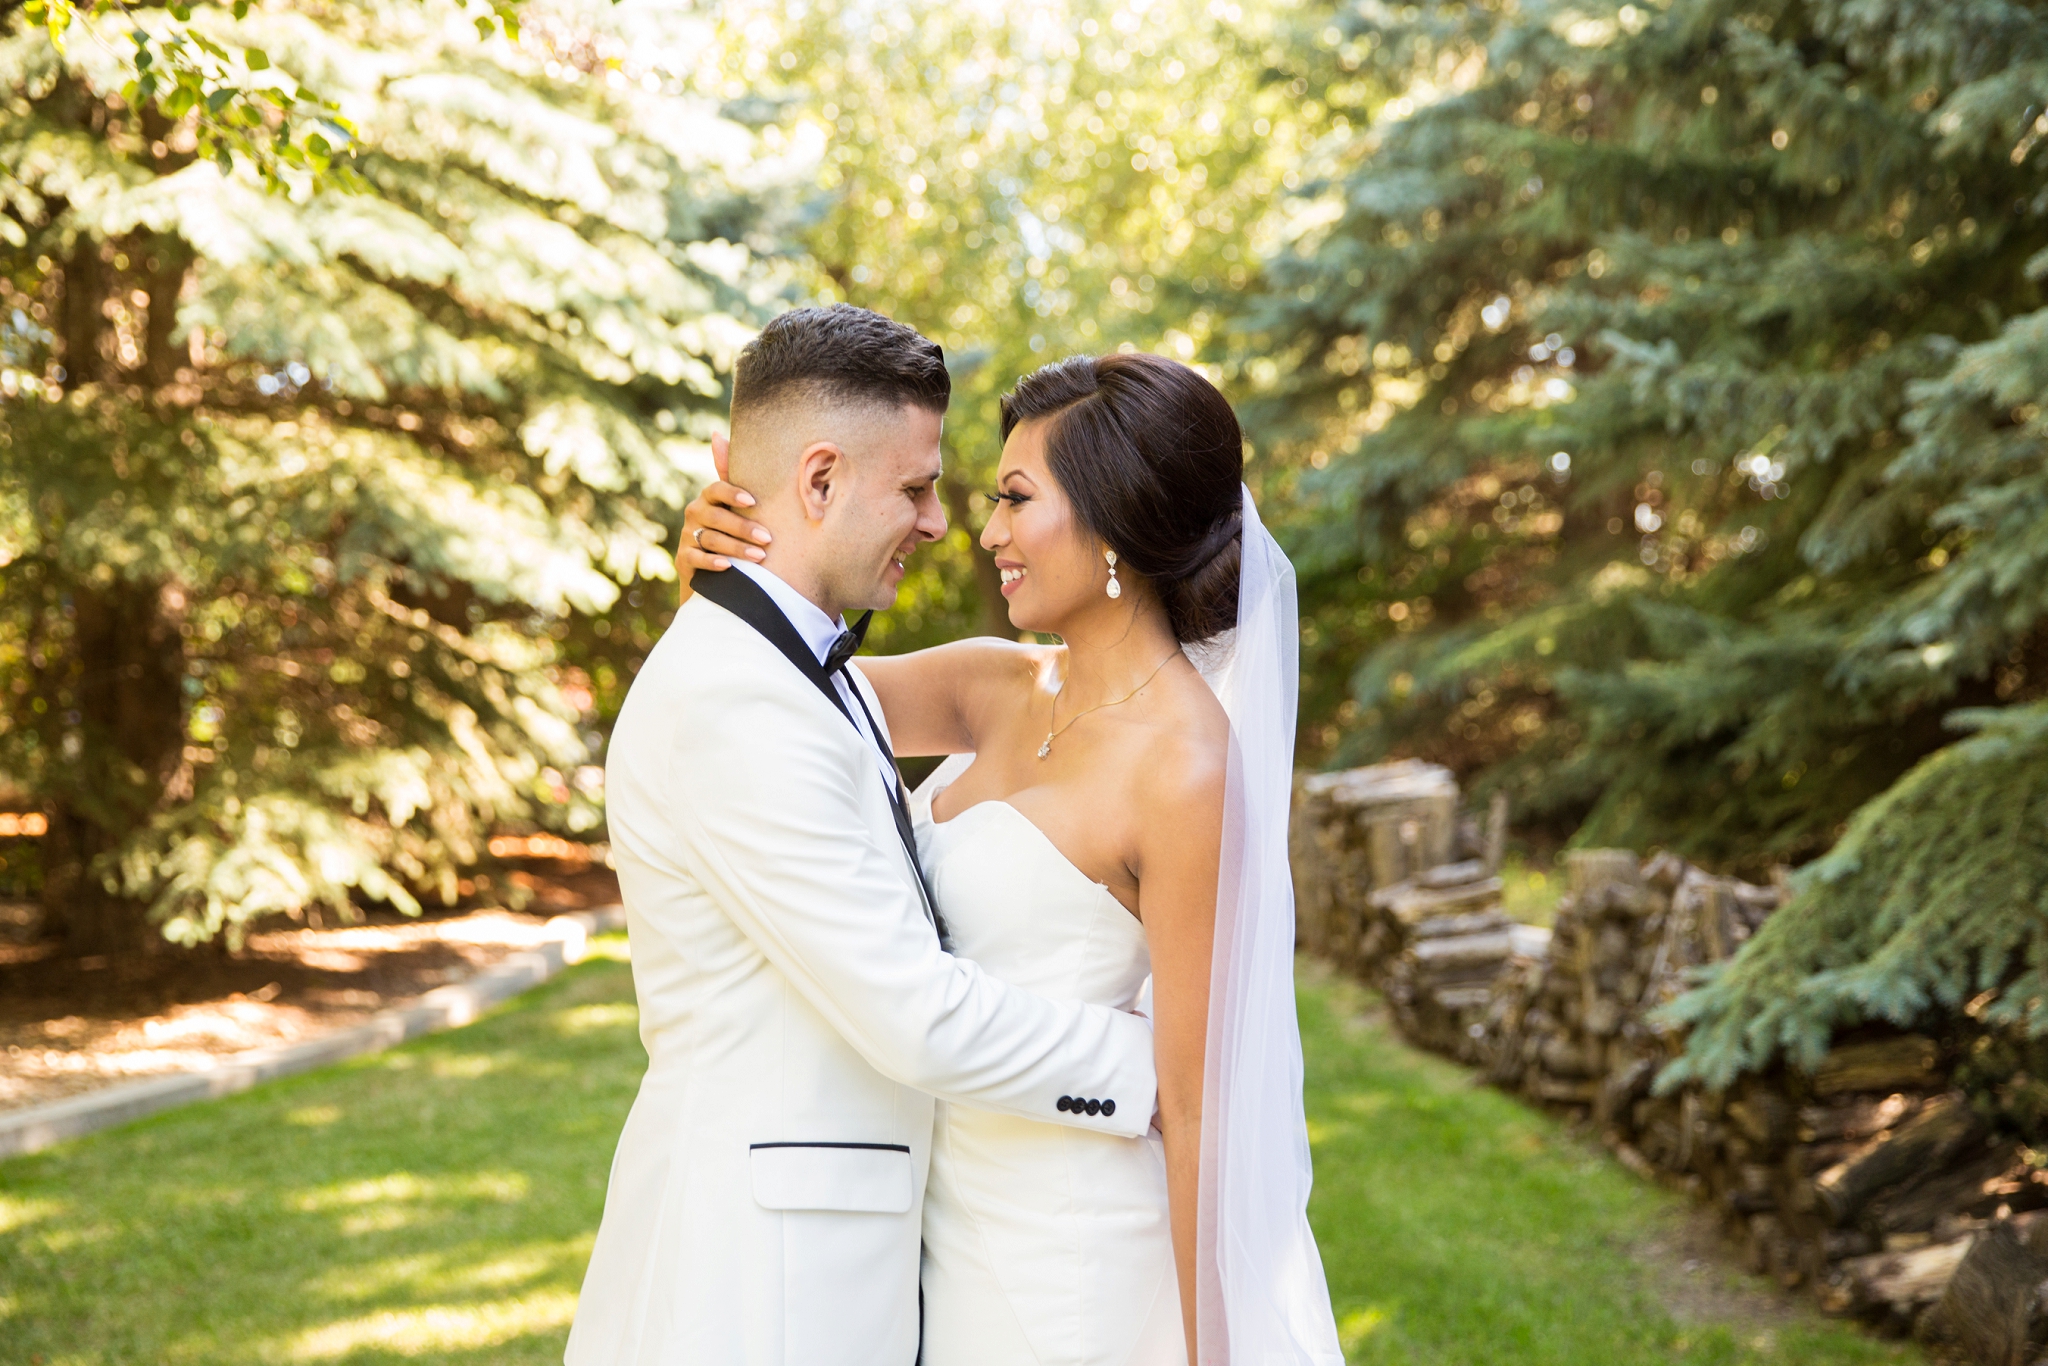 romantic outdoor wedding photos bride and groom hayley paige dress